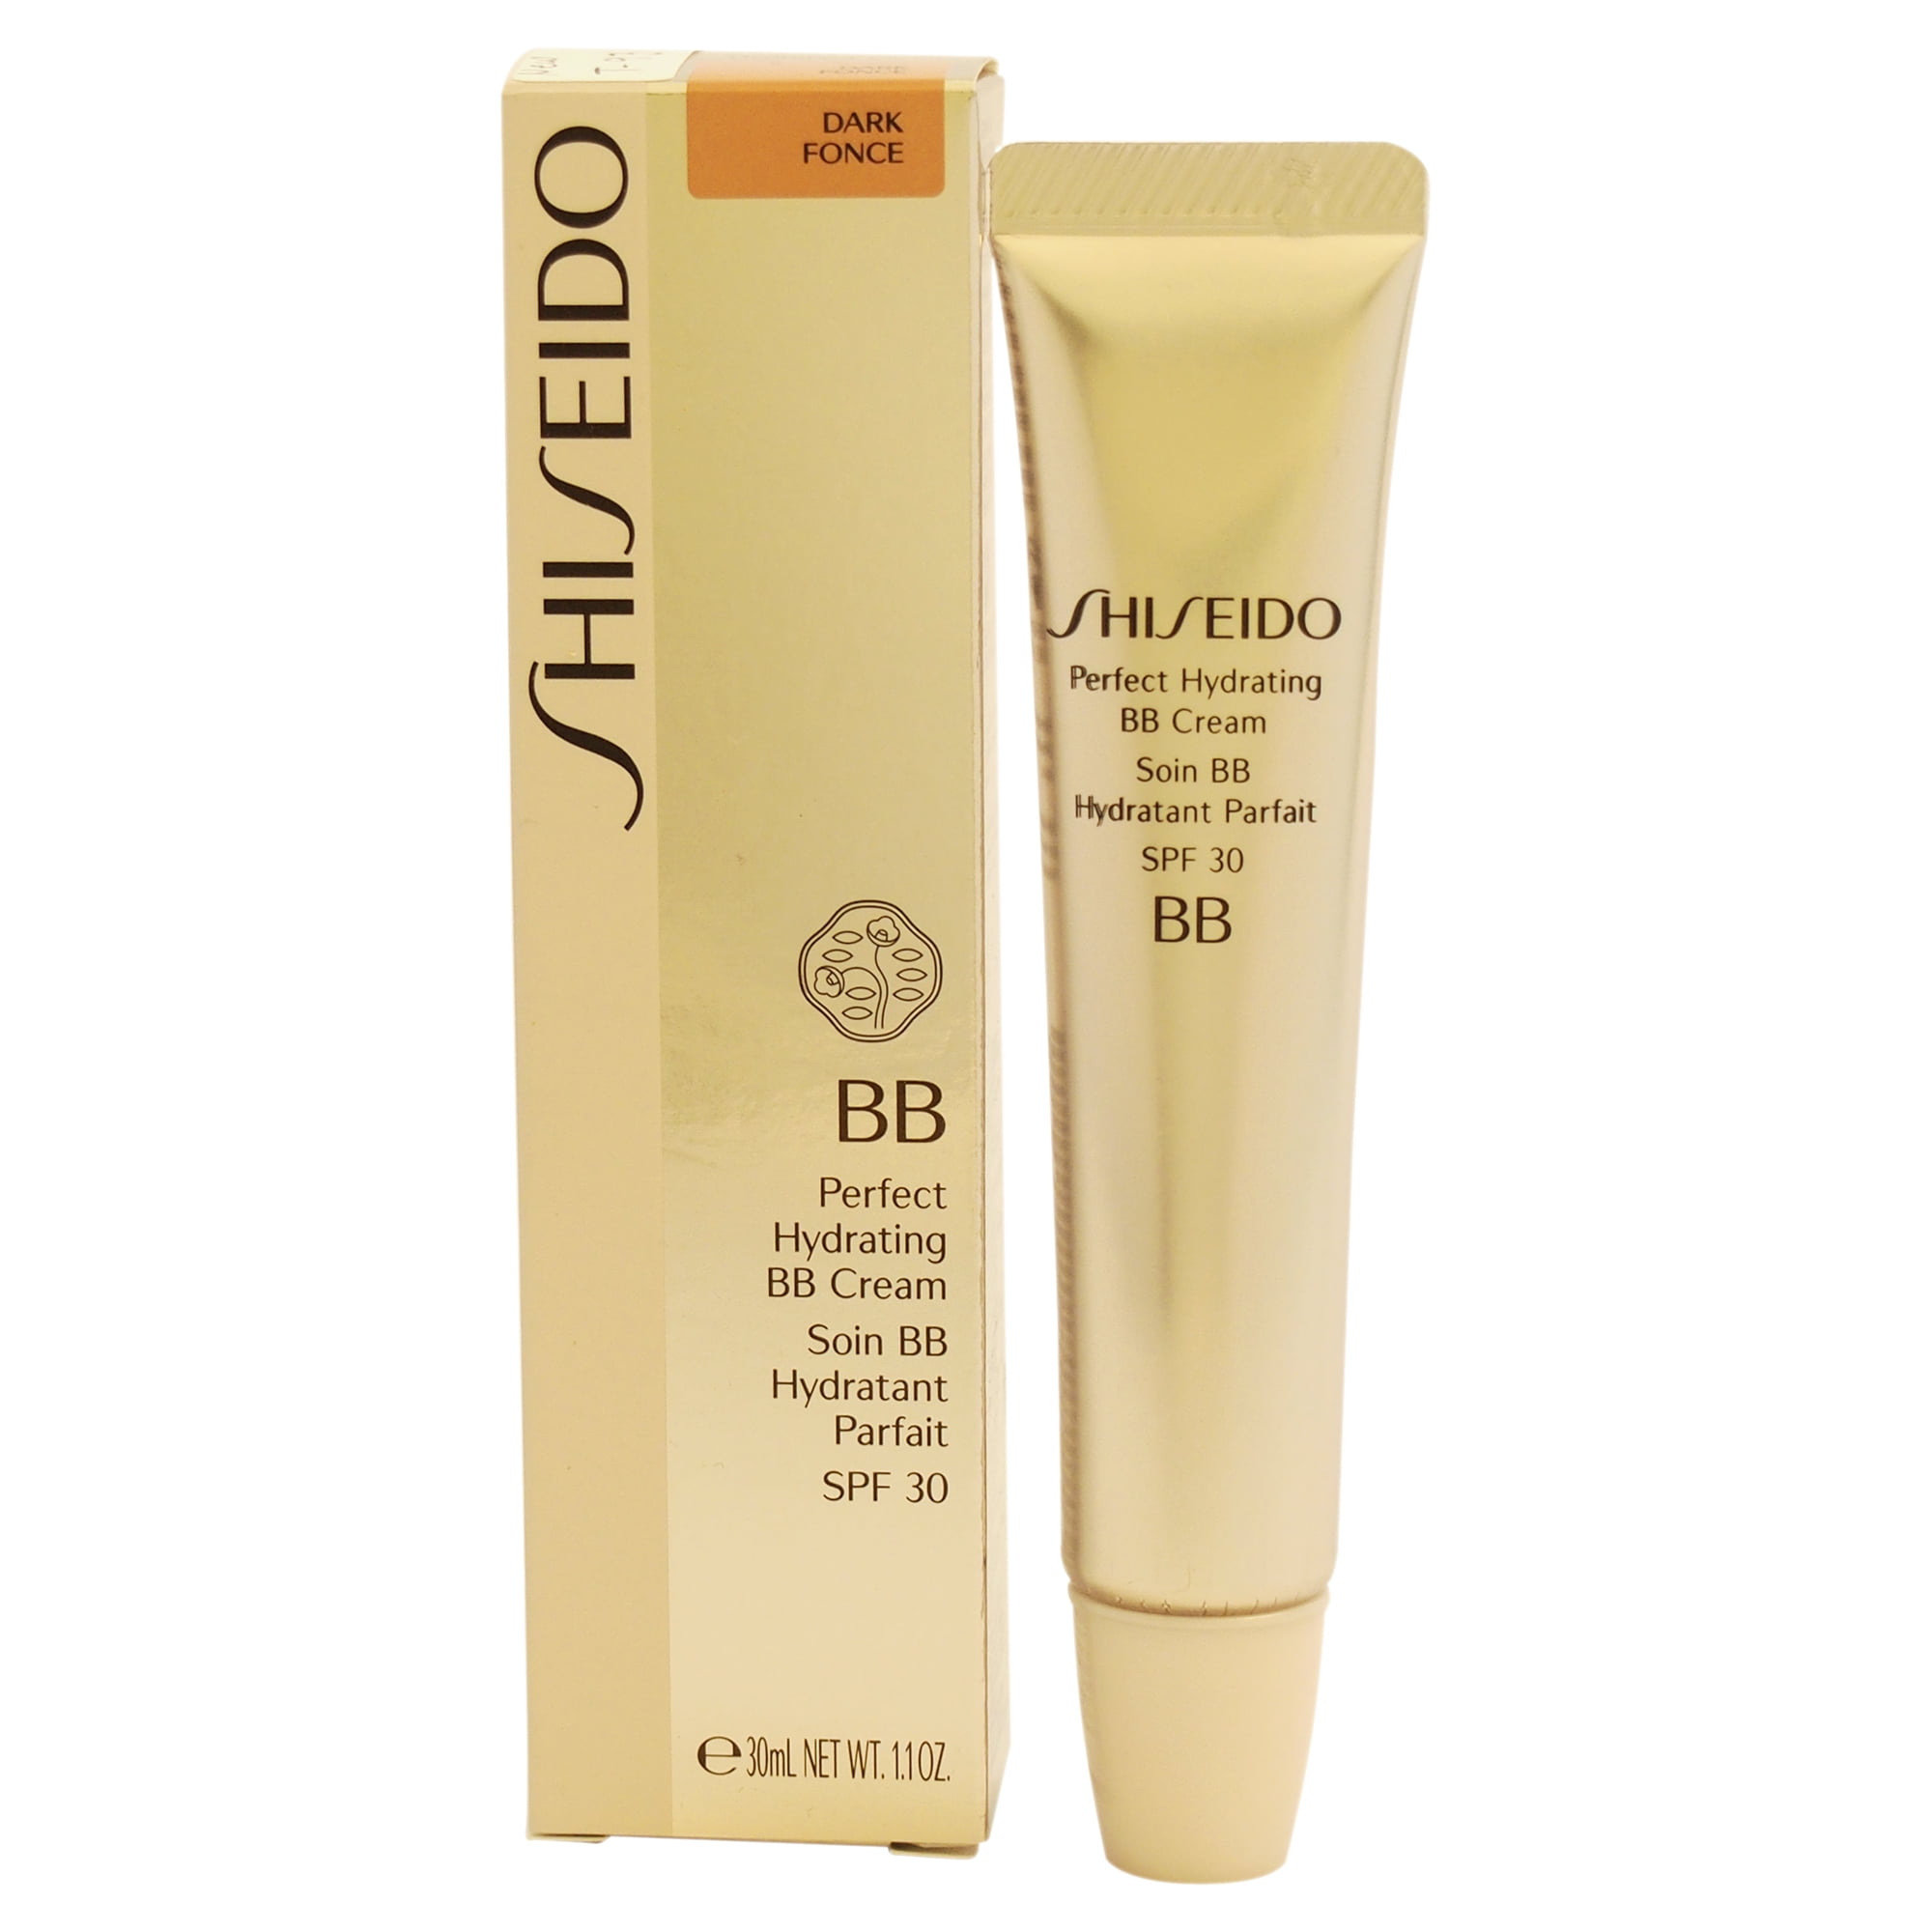 Shiseido spf 30. Shiseido BB-крем spf30. Крем SPF 30 Shiseido. Шисейдо крем BB SPF 30. Shiseido perfect Hydrating BB Cream.